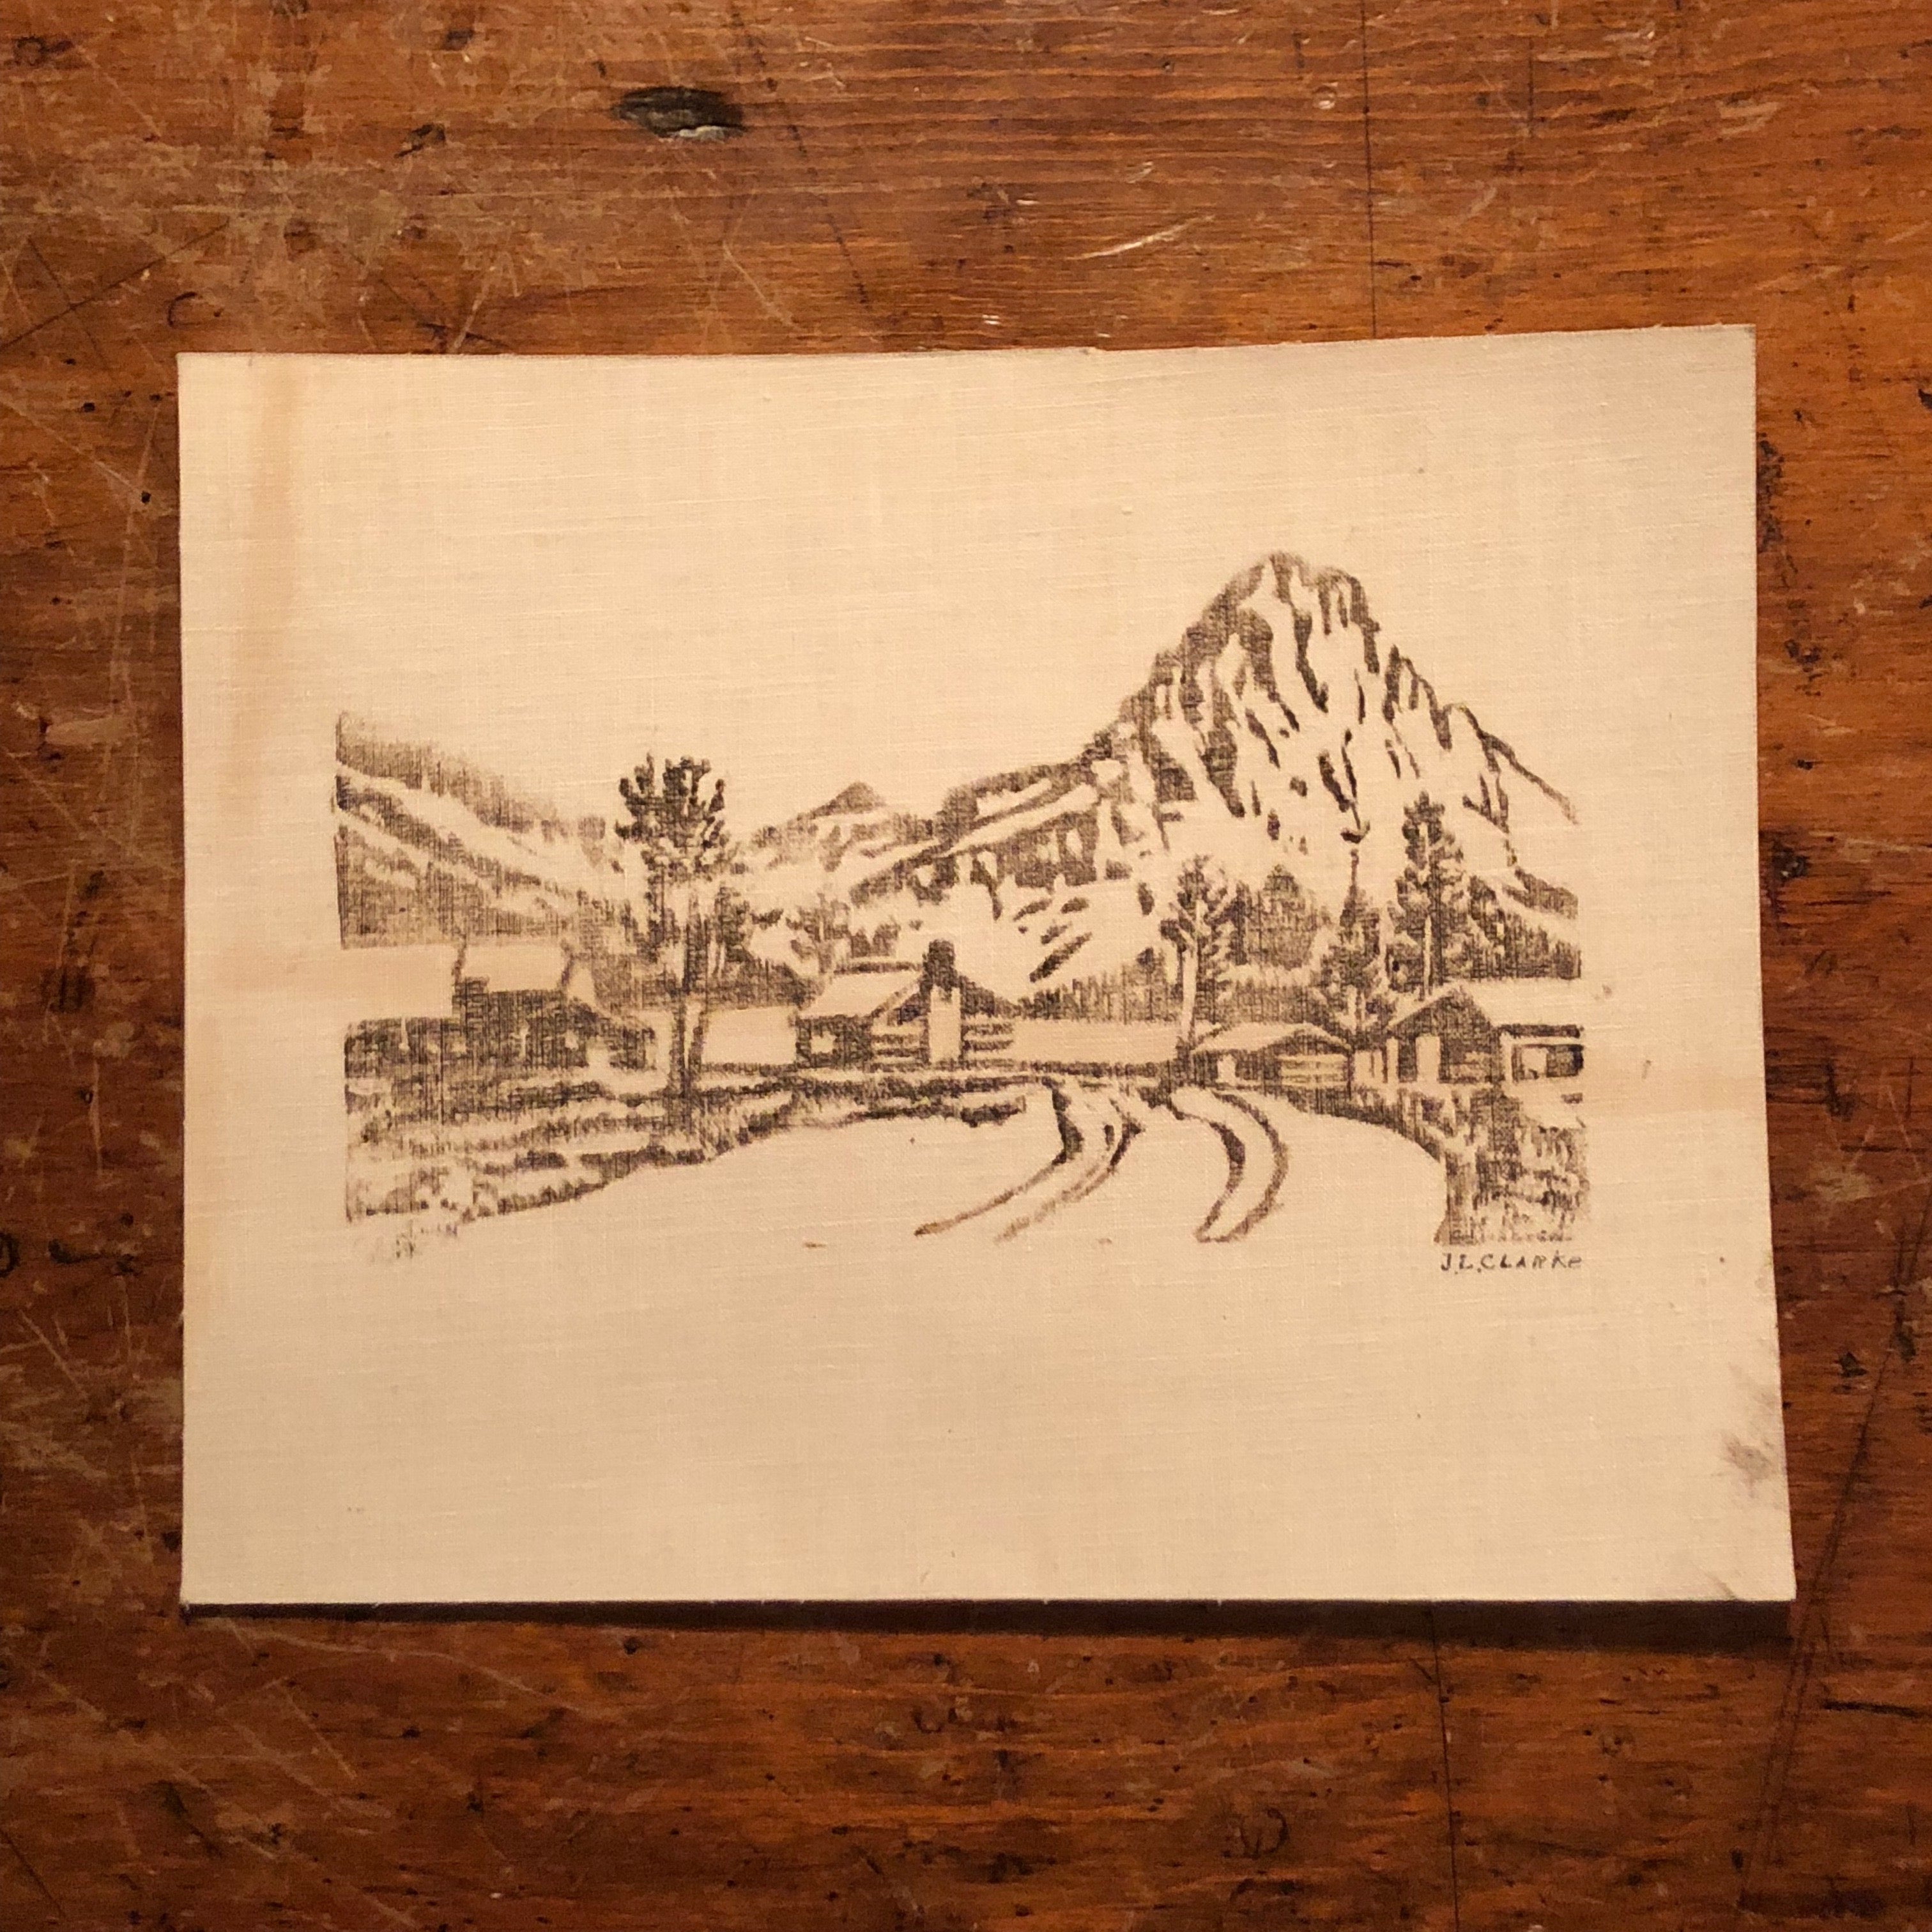 John L. Clarke Linoleum Print of Mountain and Log Cabin Scene - Signed J.L. Clarke - Native American Art - Montana Artwork - Regional Artist